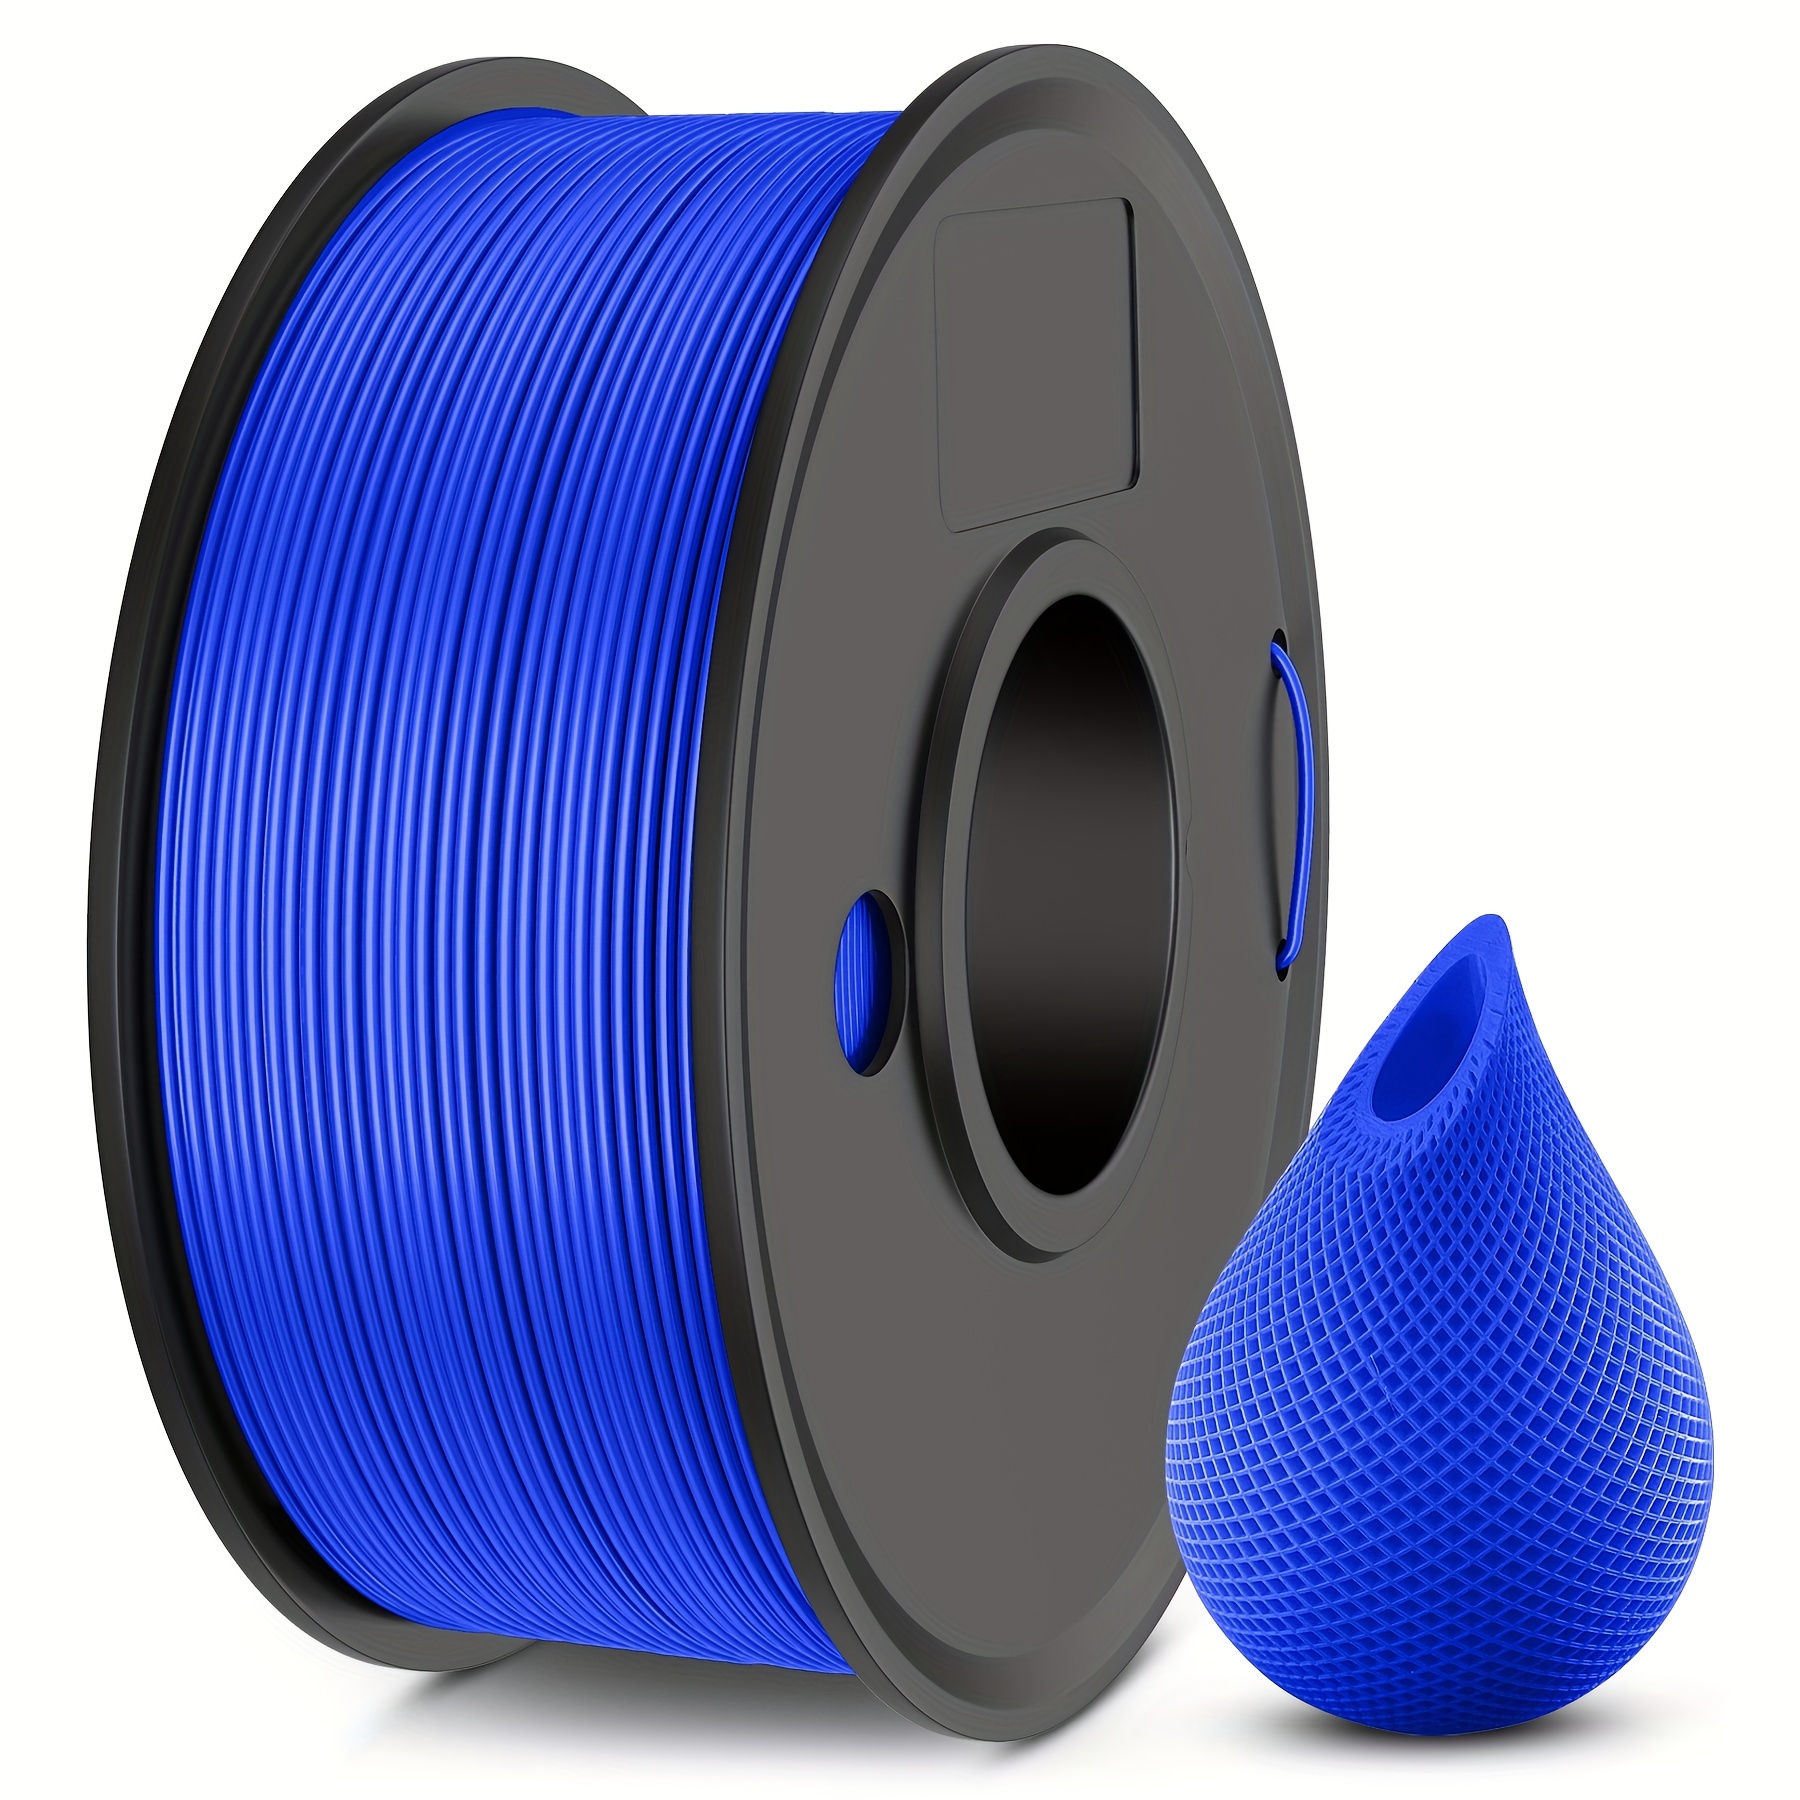 SUNLU PETG Blue 175mm 3D Printer Filament 1kg